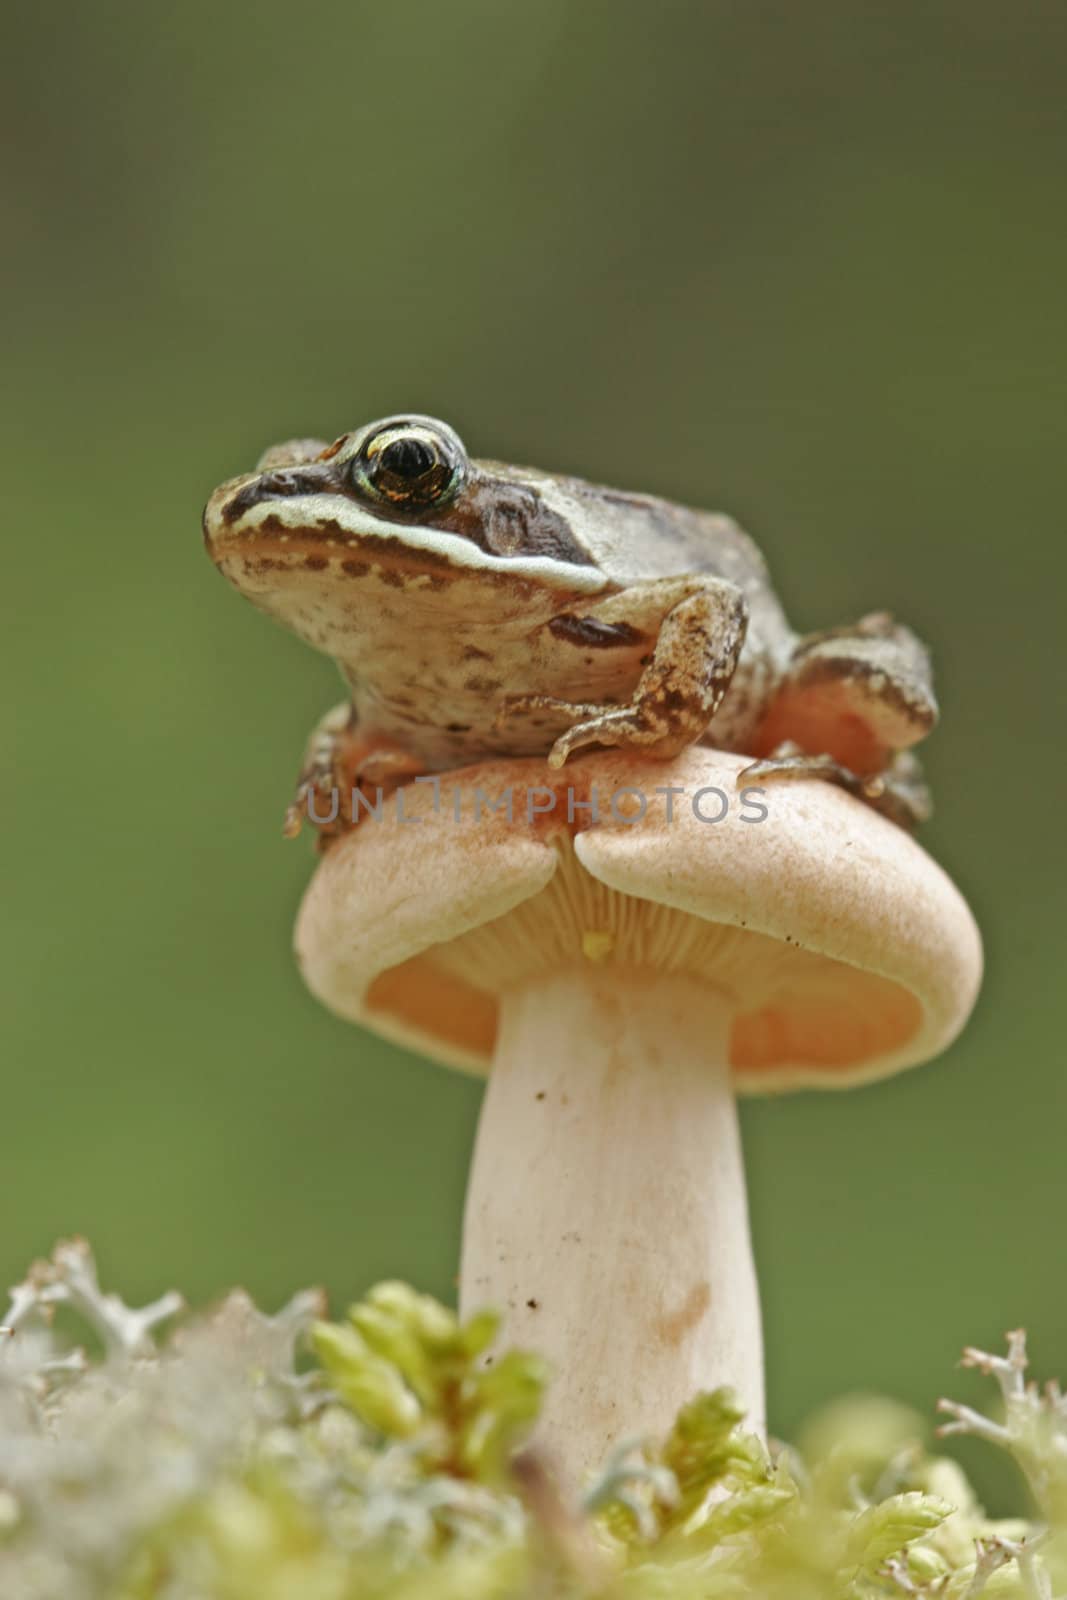 Wood frog (Rana sylvatica) on mushroom